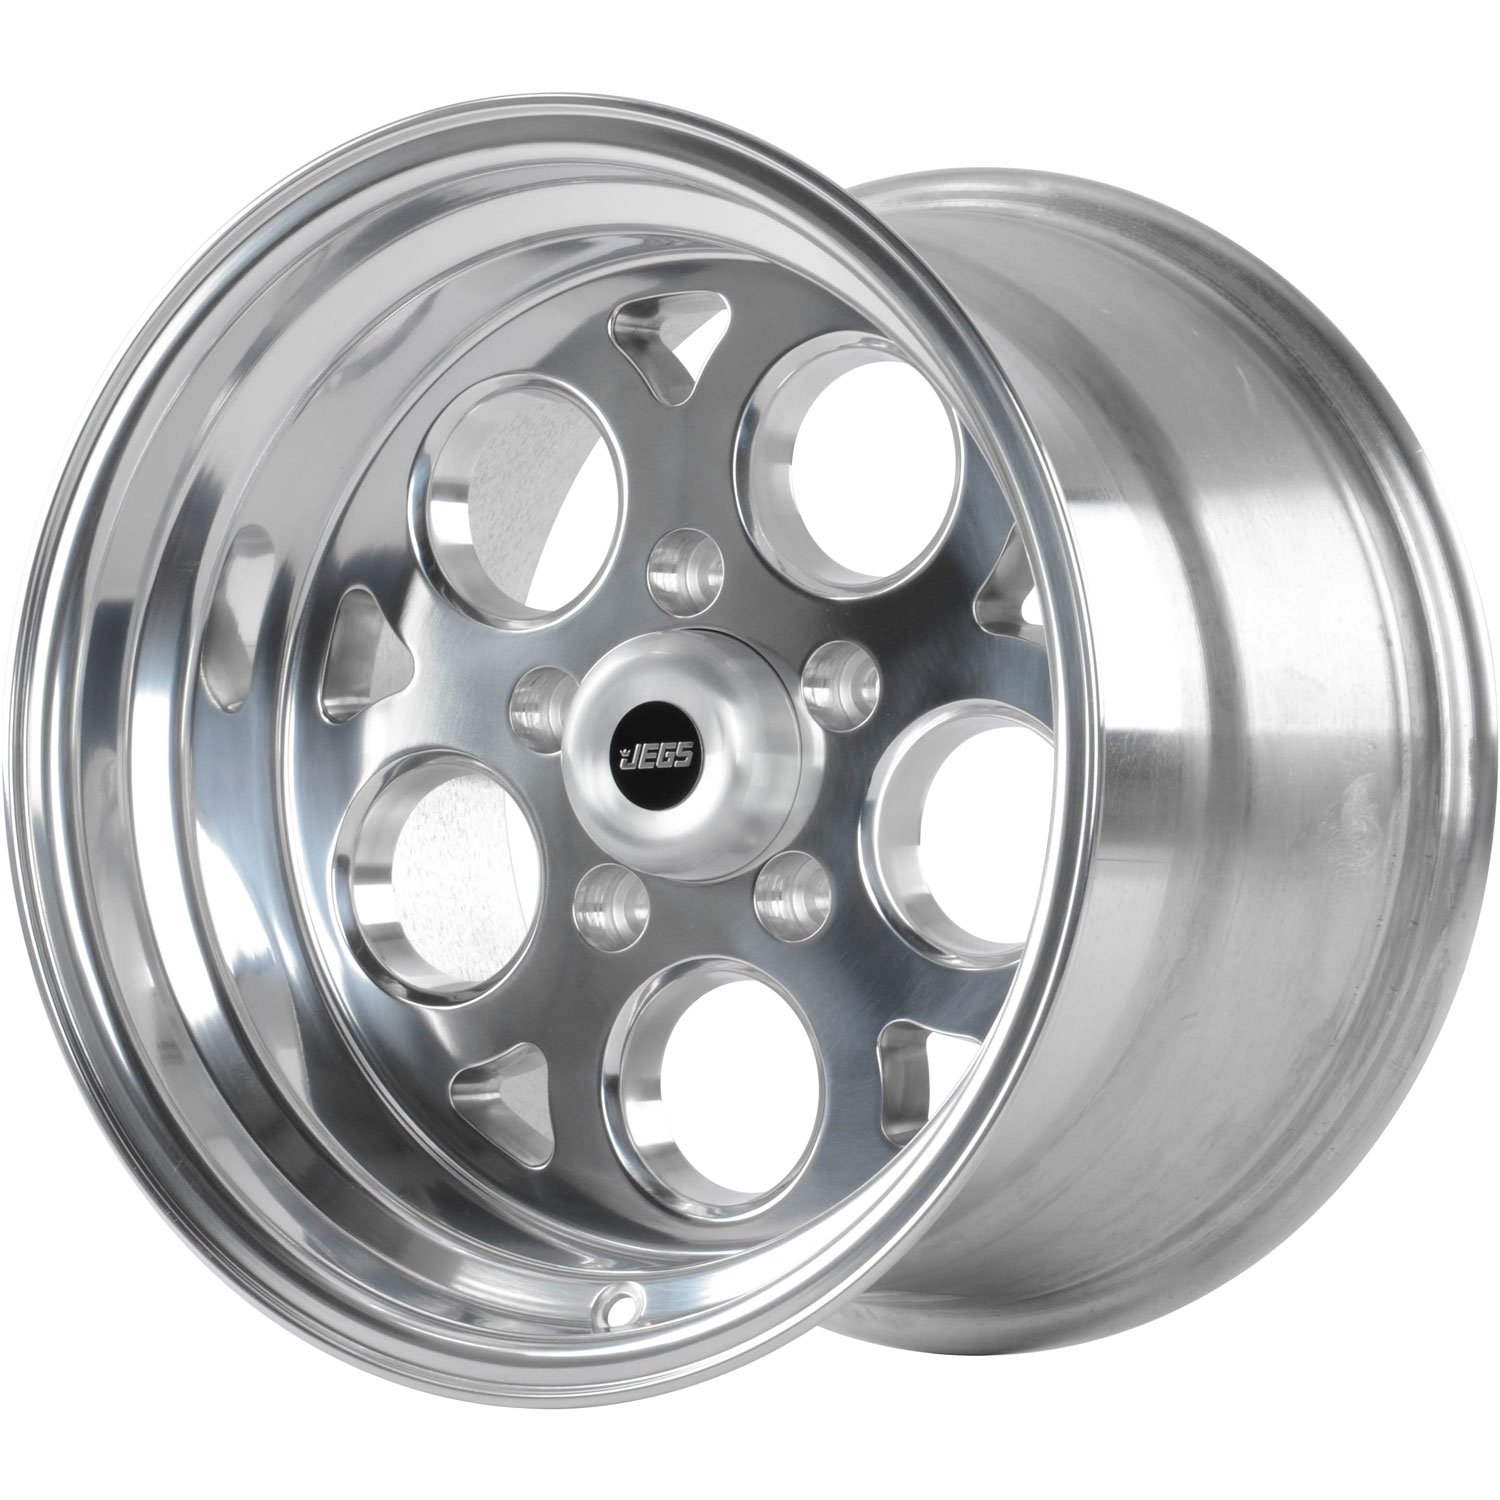 SSR Mag Wheel [Size: 15" x 10"] Polished